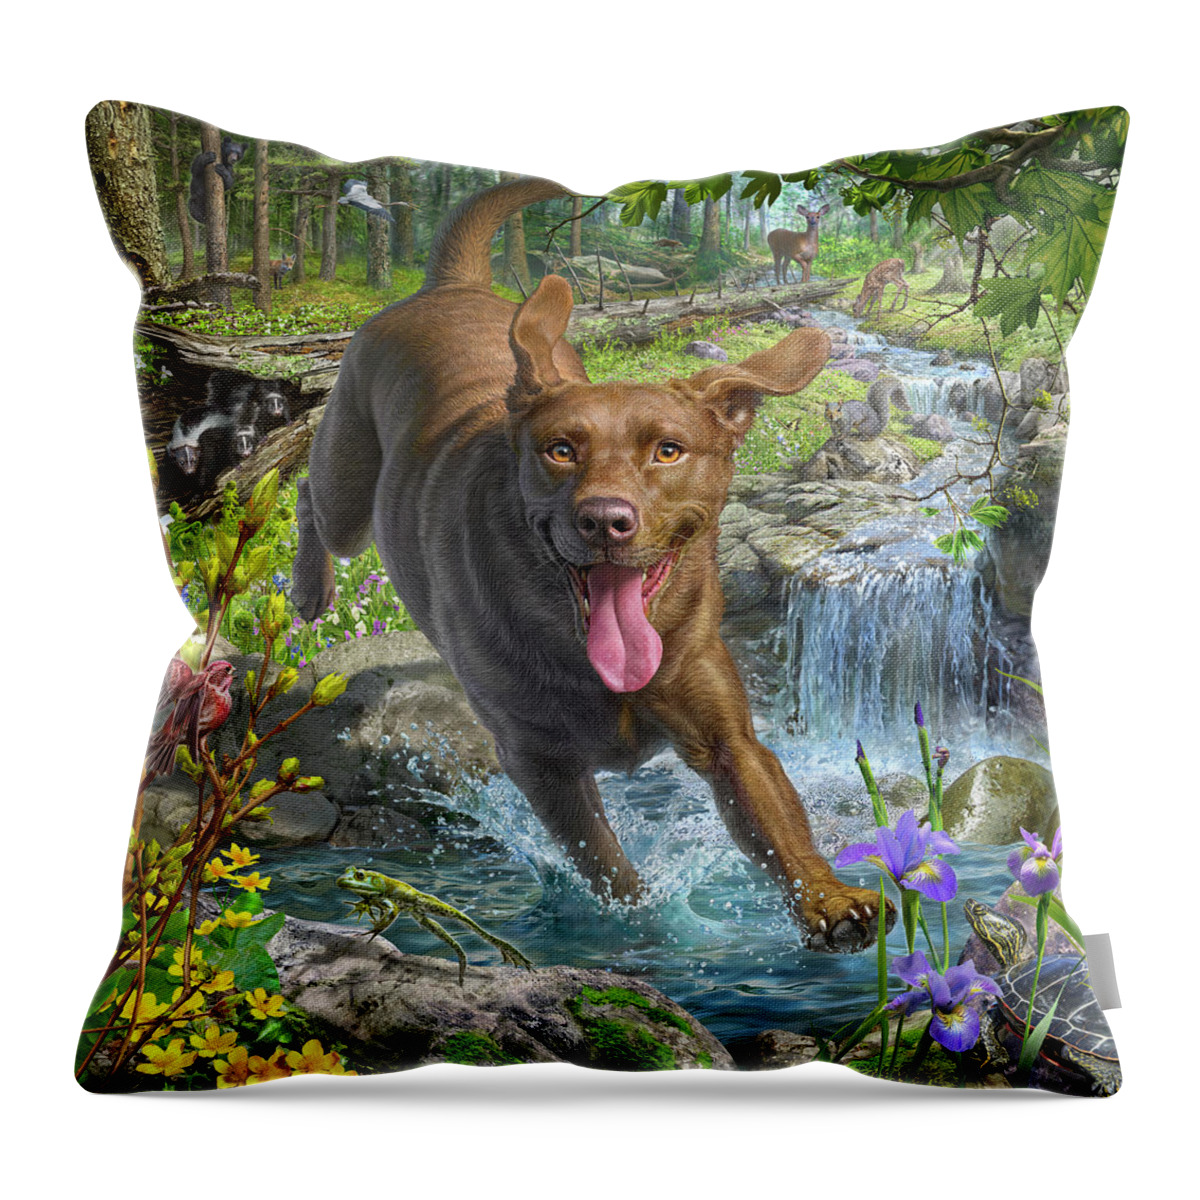 Chocolate Labrador Throw Pillow featuring the digital art Spring Runoff by Mark Fredrickson